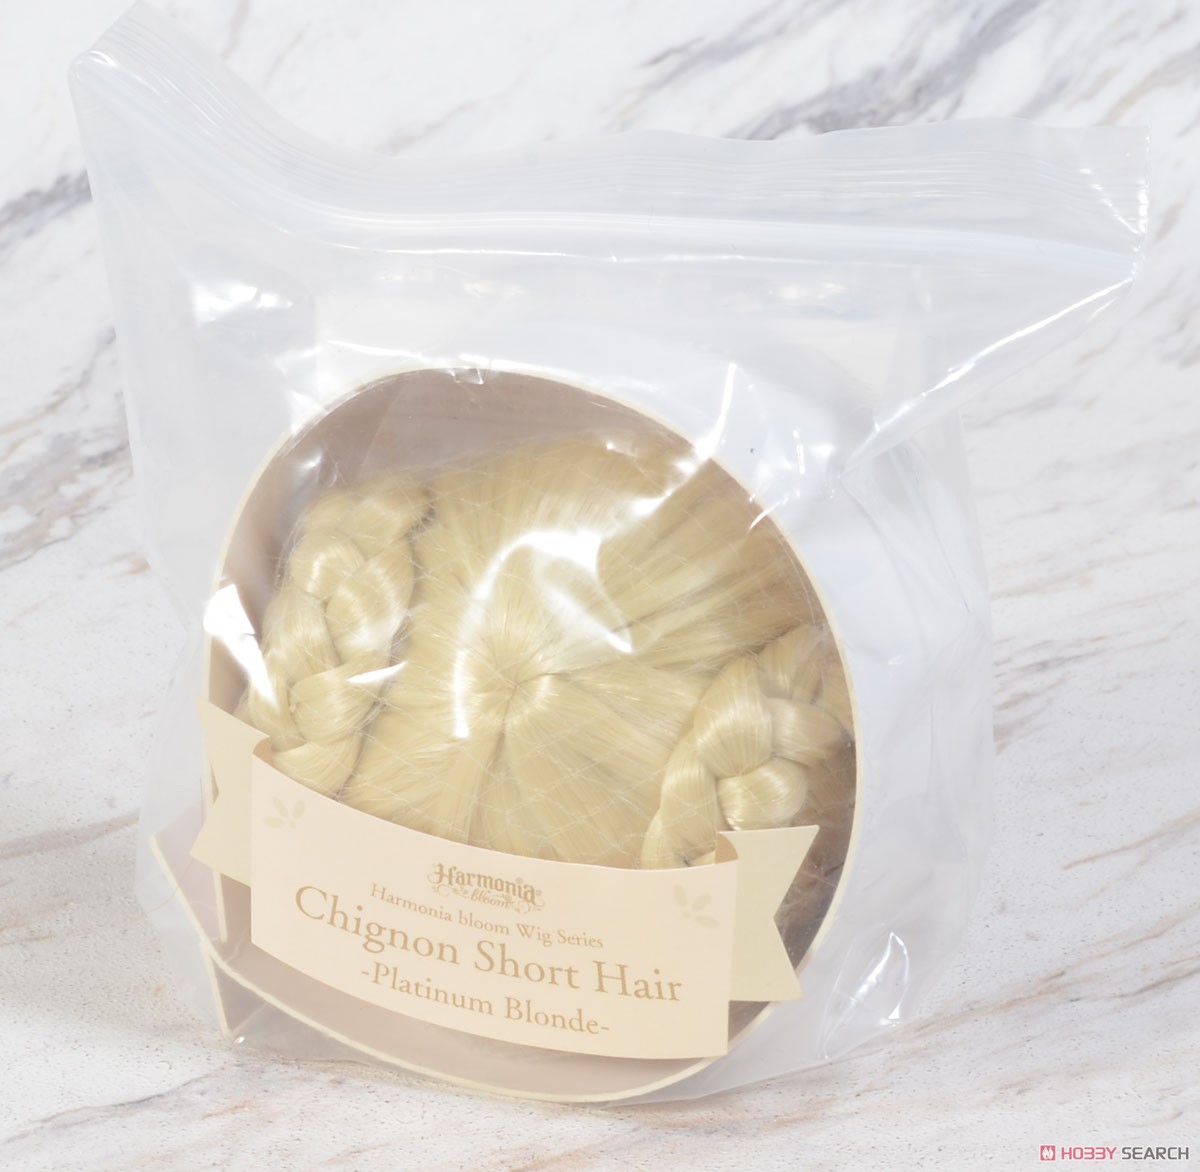 Harmonia Bloom Wig Series: Chignon Short Hair (Platinum Blonde) (Fashion Doll) Package1